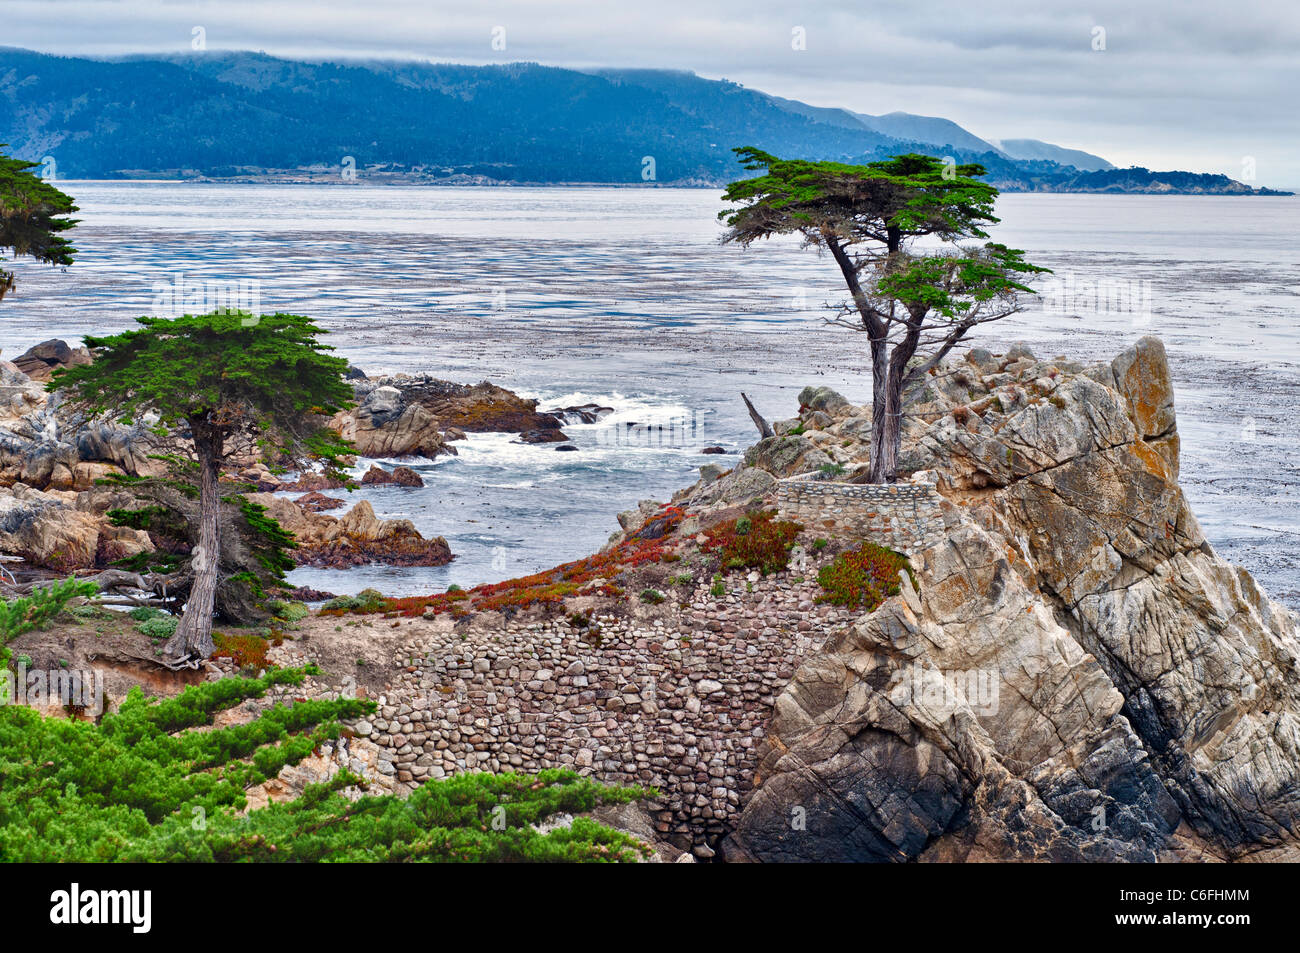 The famous Lone Cypress tree (Cupressus macrocarpa) of Pebble Beach, California. Stock Photo